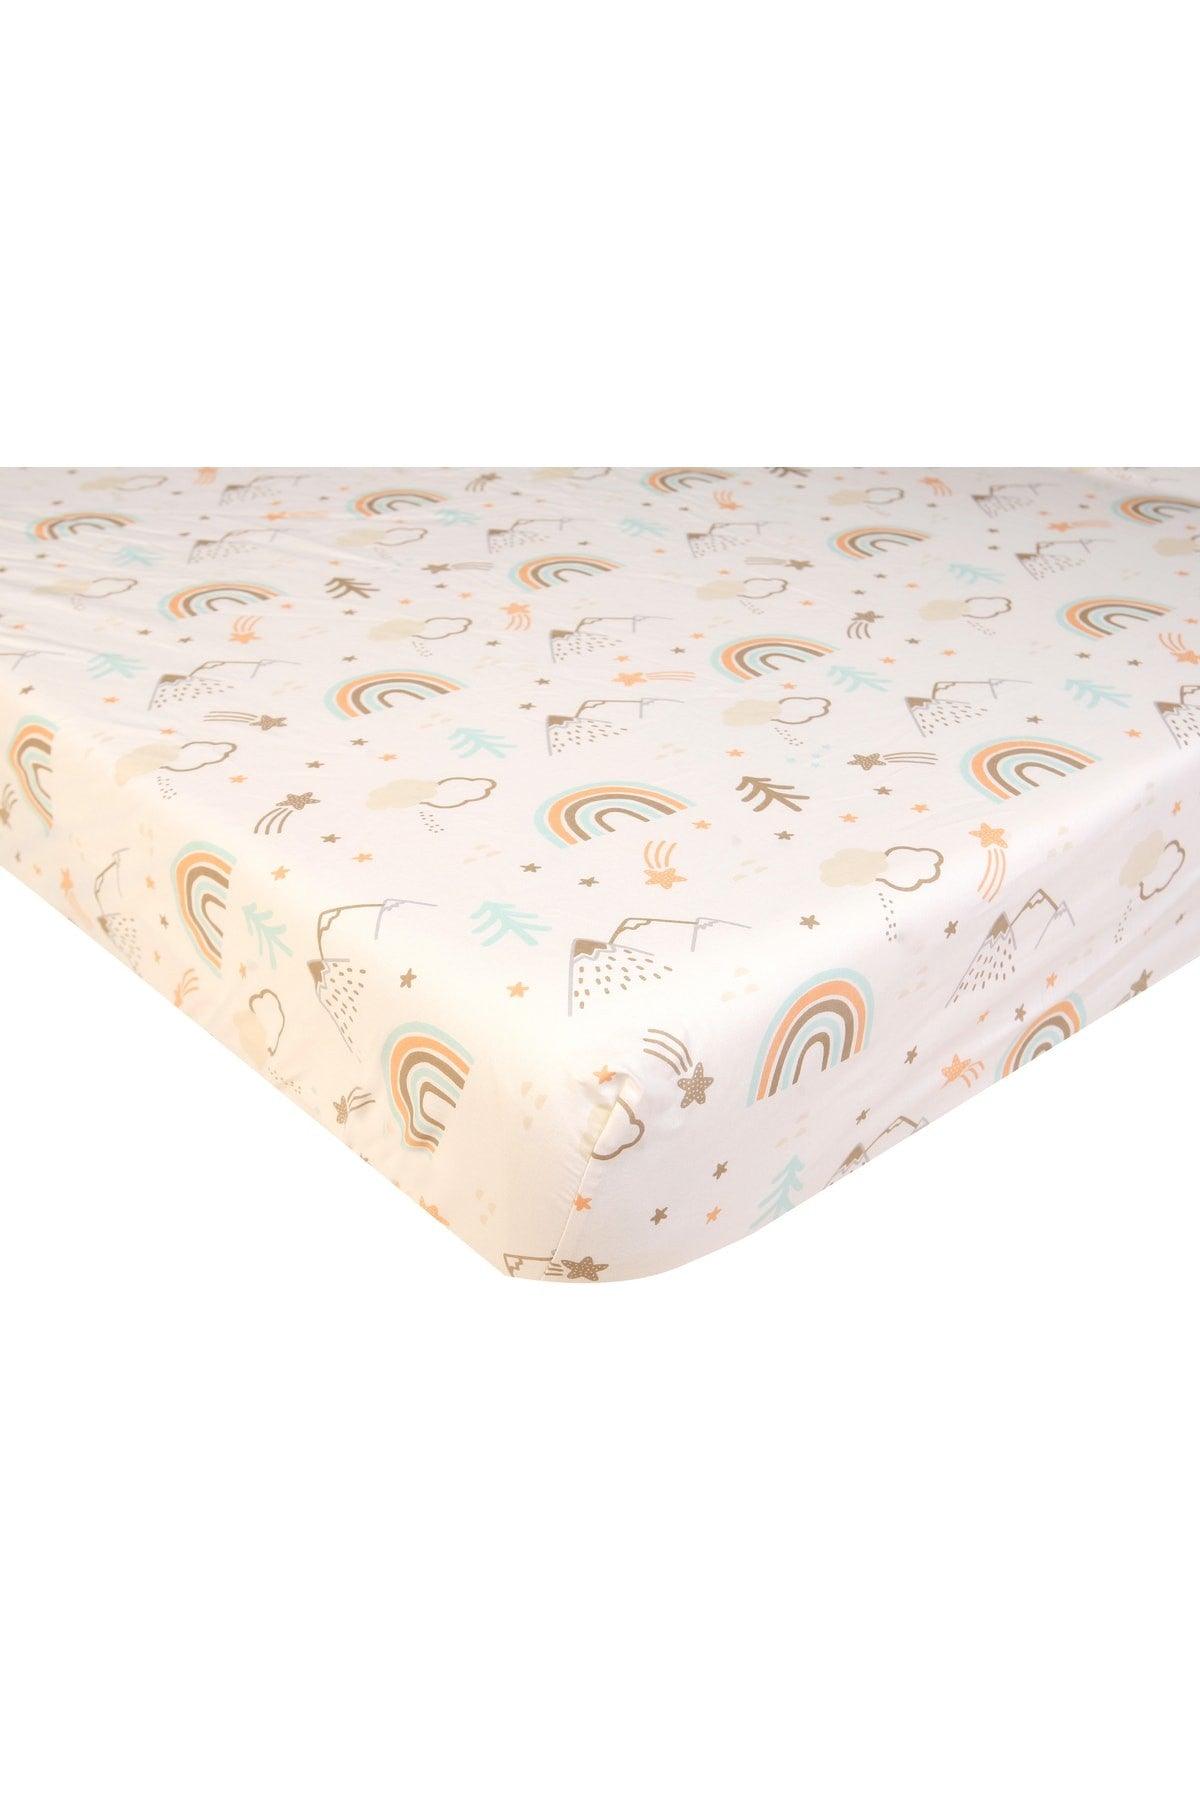 Park Mattress Elastic Bed Sheet Set Rainbow 70x110 Cm. And Pillowcase 35x45 Cm - Swordslife